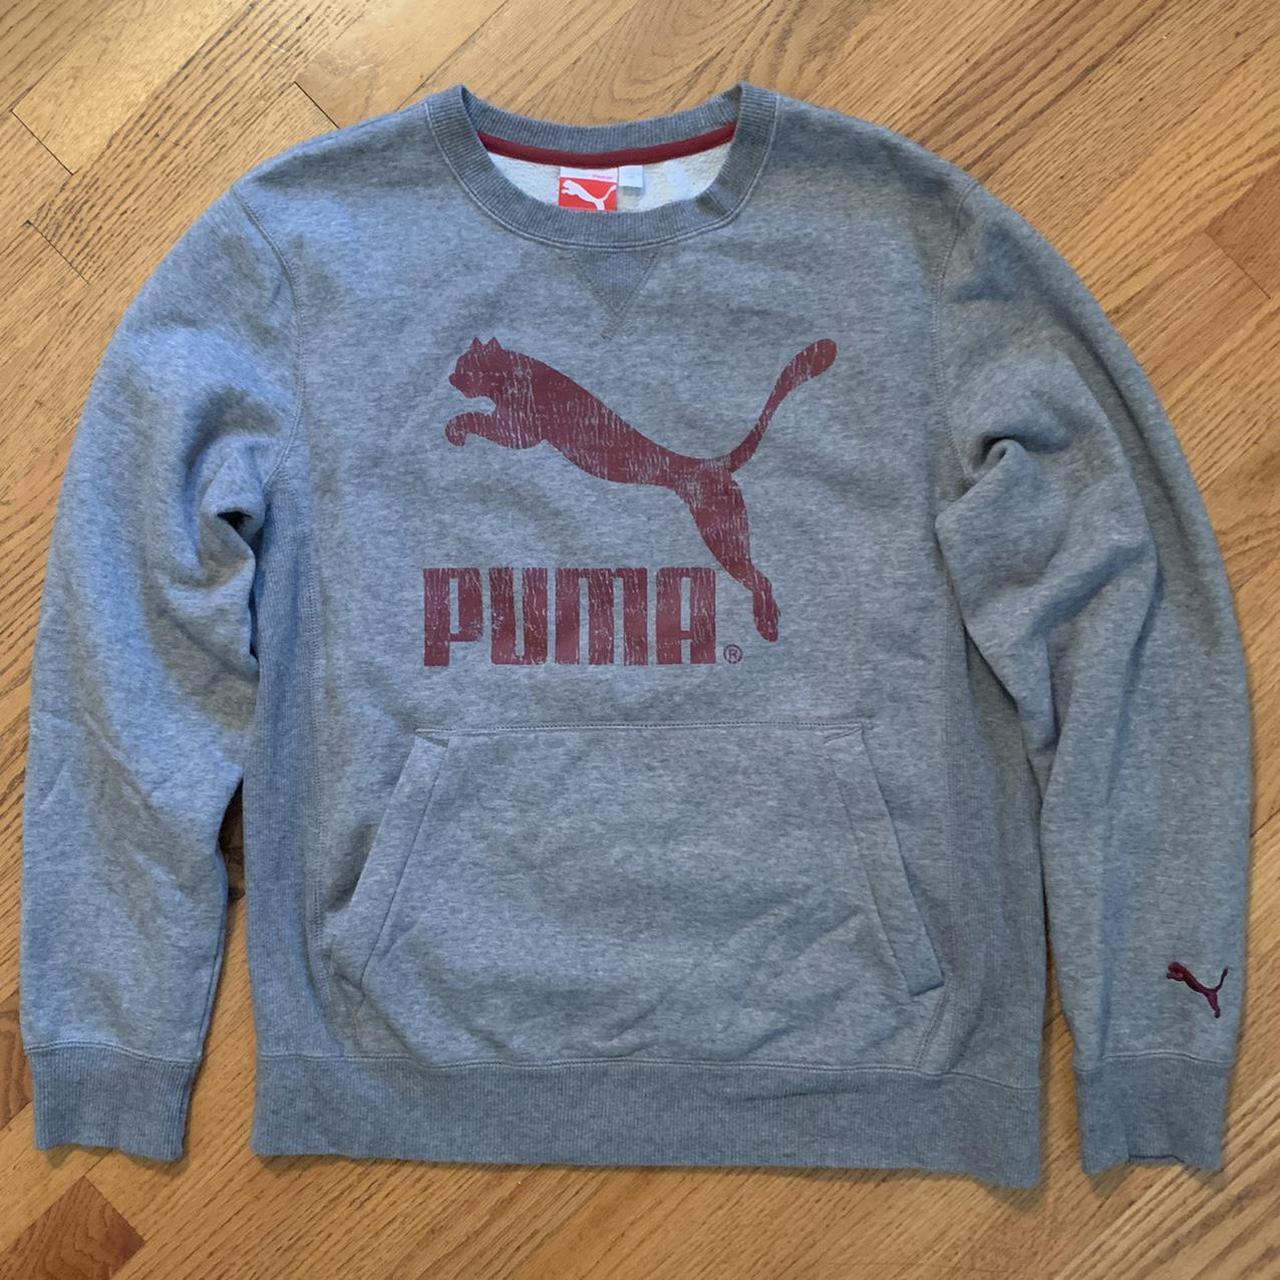 Product Image 1 - Cool Puma kangaroo pocket sweater.